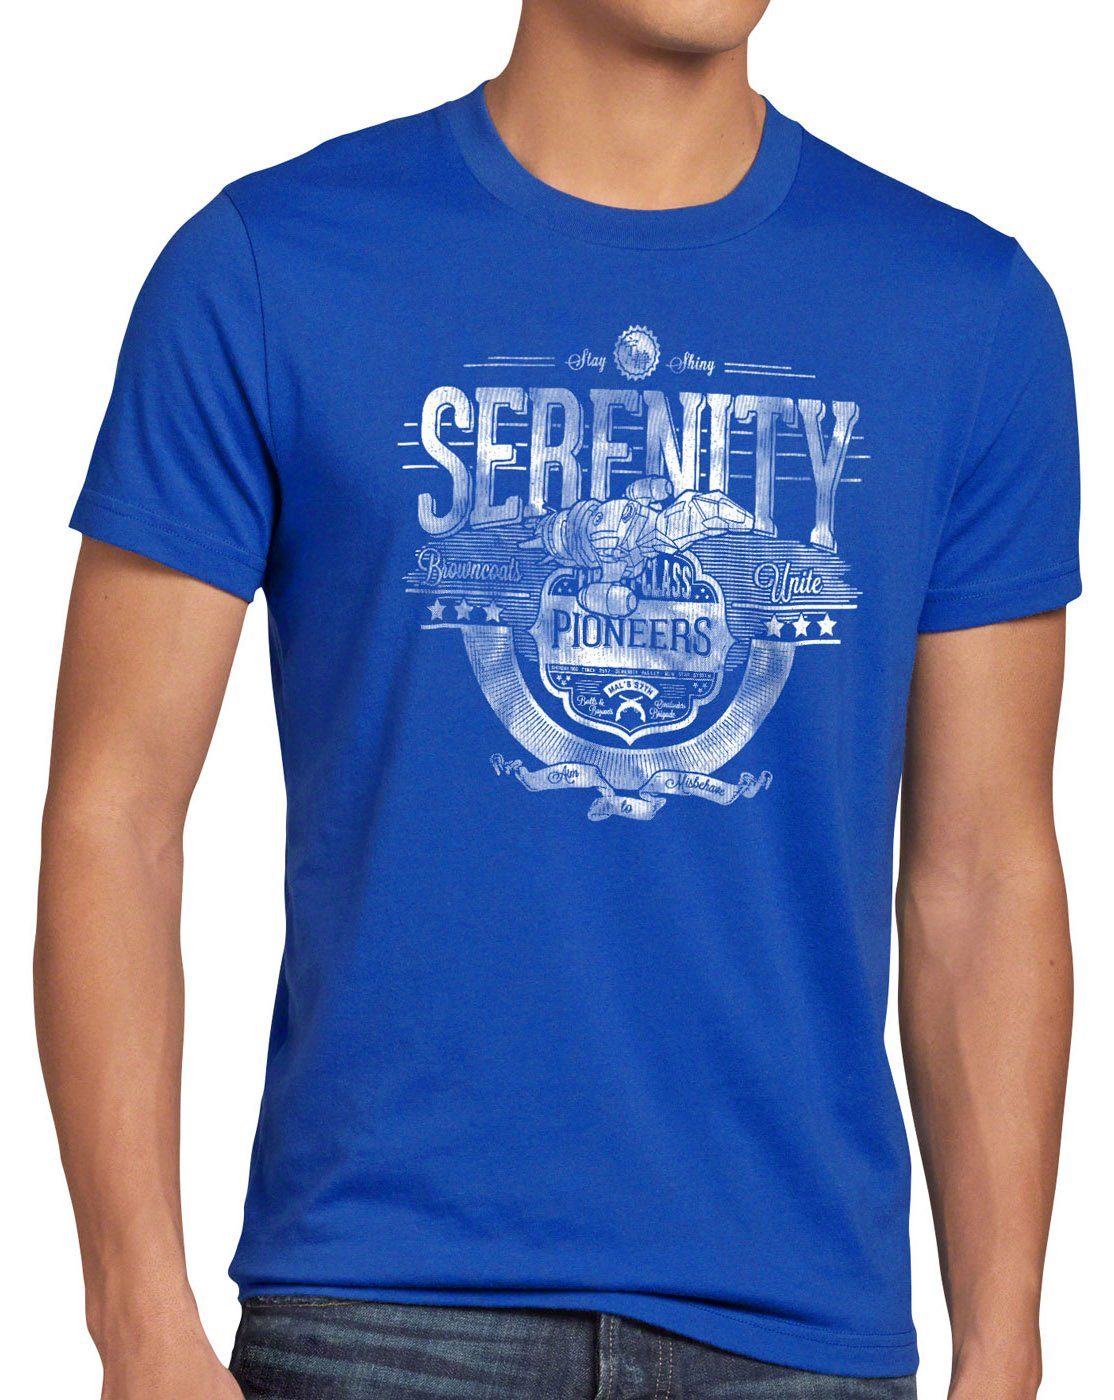 Firefly aufbruch Serenity Herren style3 T-Shirt raumschiff allianz Print-Shirt blau